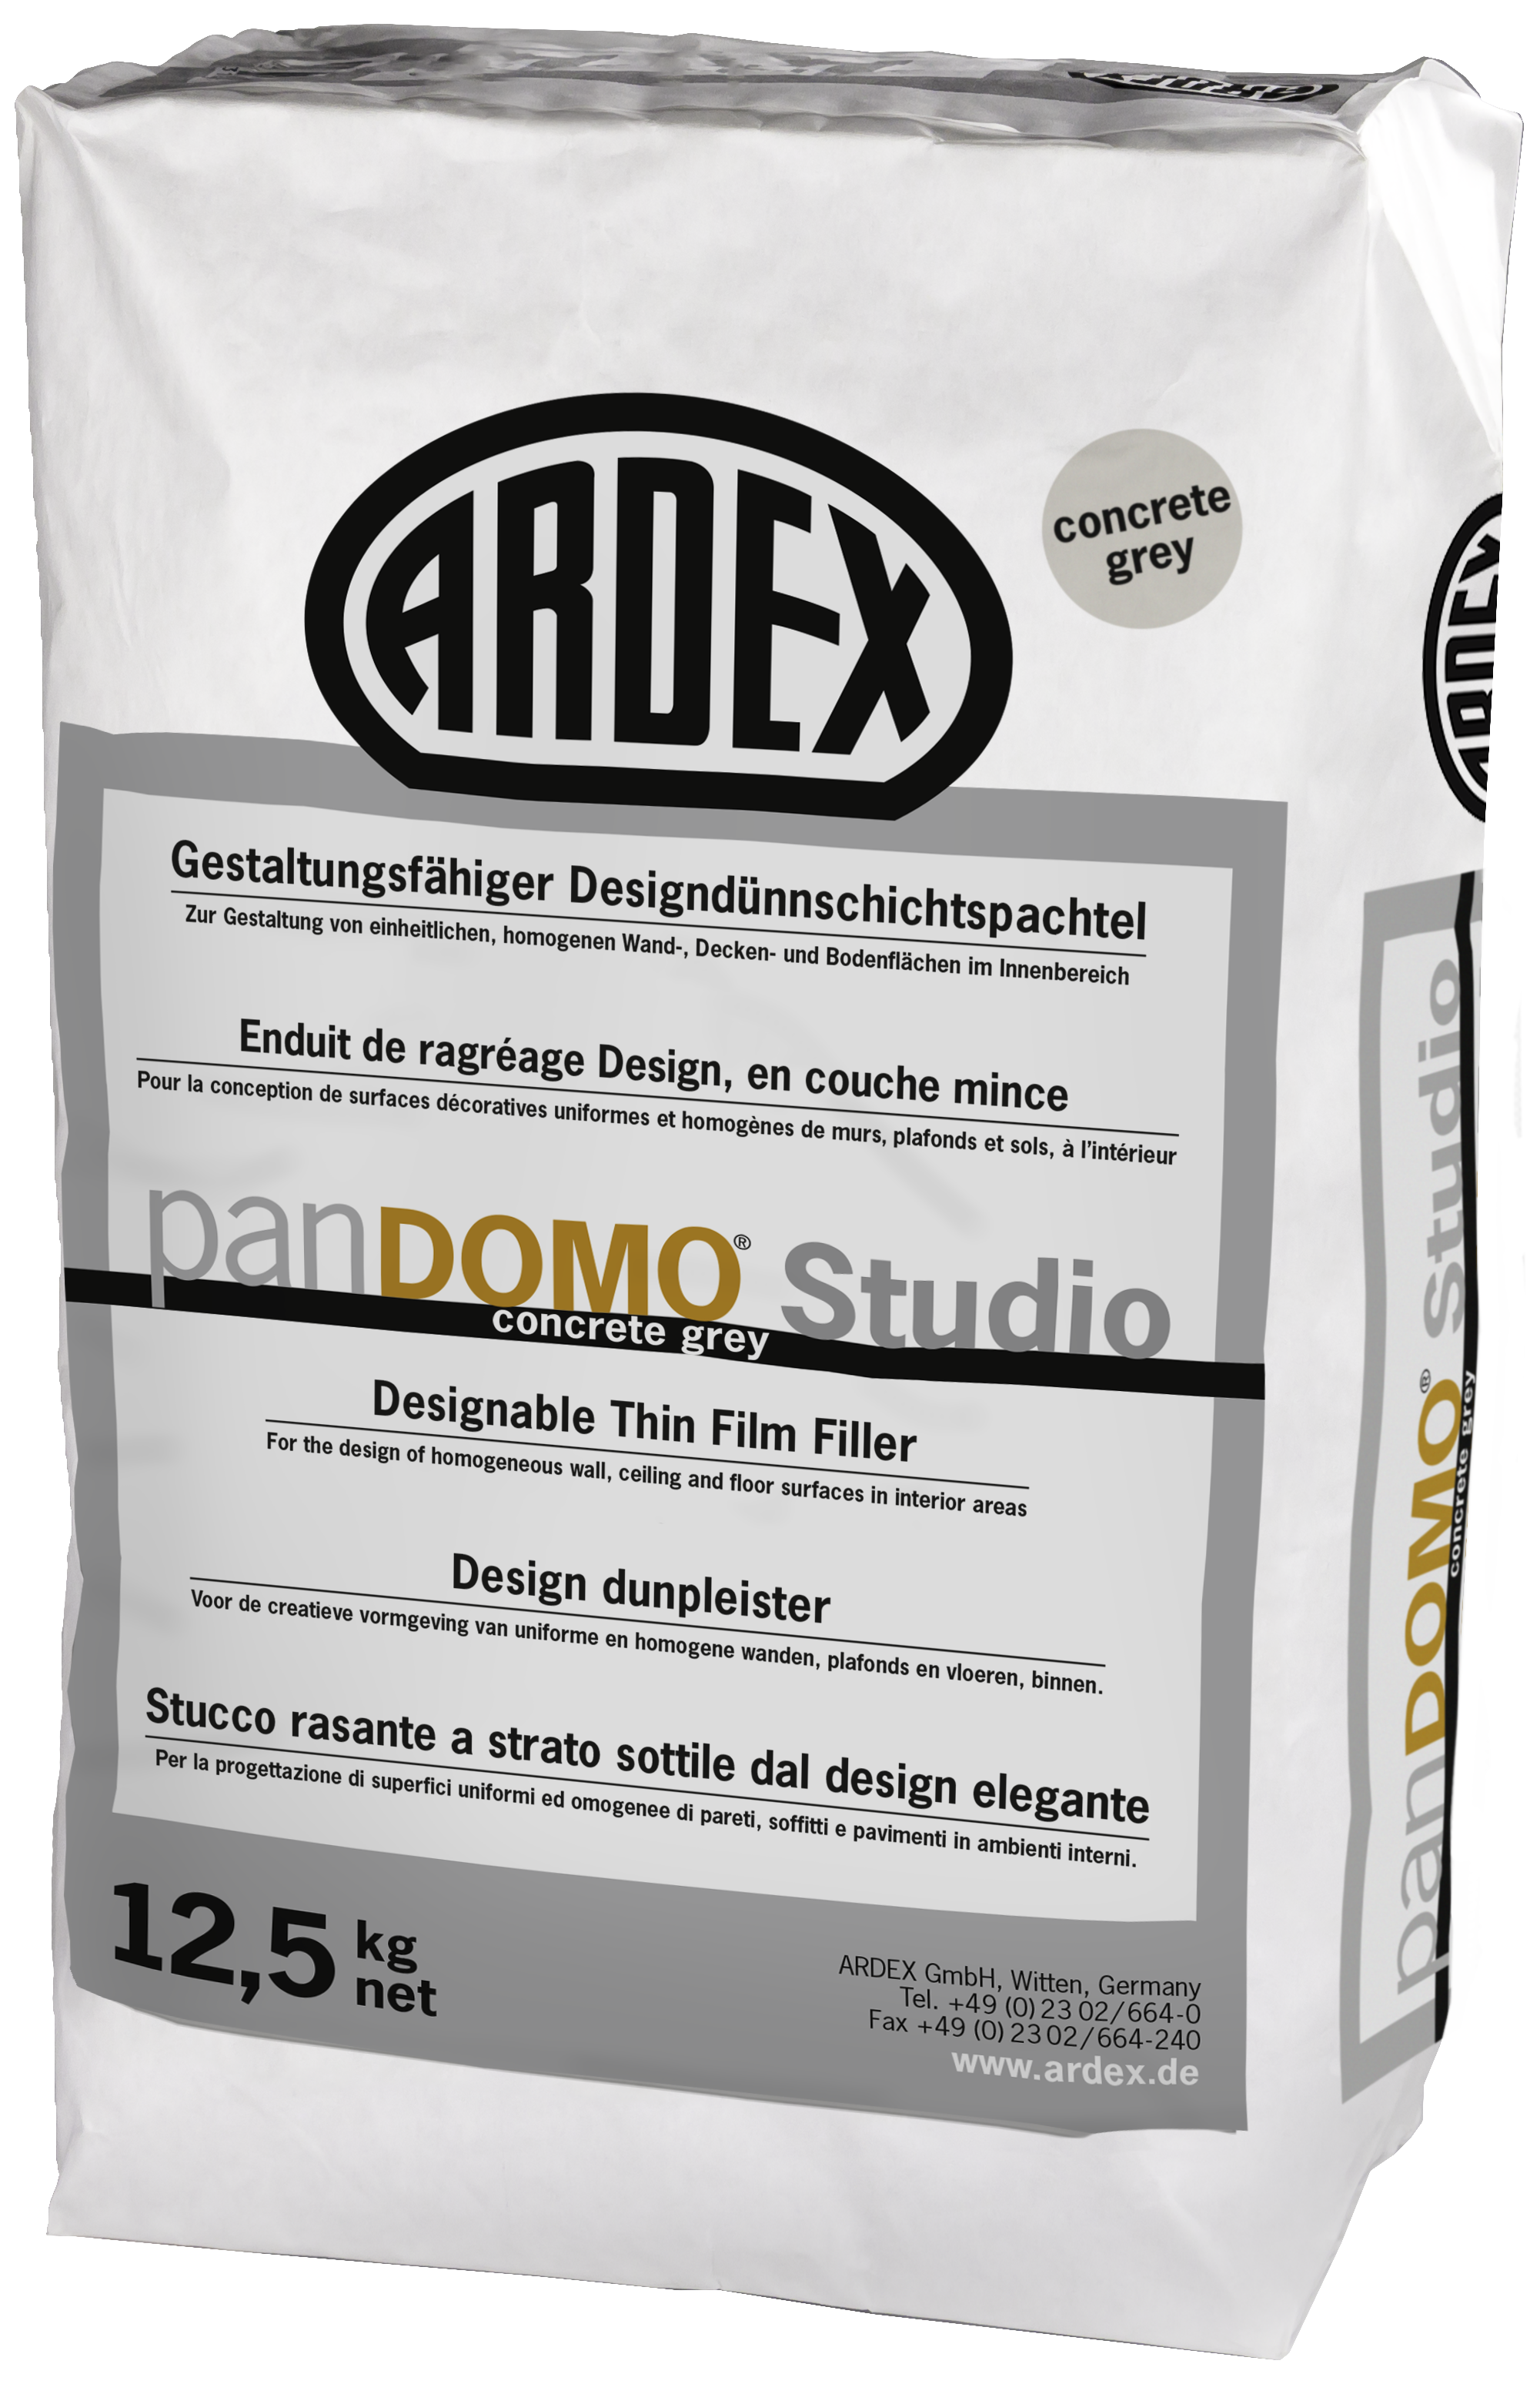 [Translate to BeNeLux-nl:] PANDOMO® Studio concrete grey